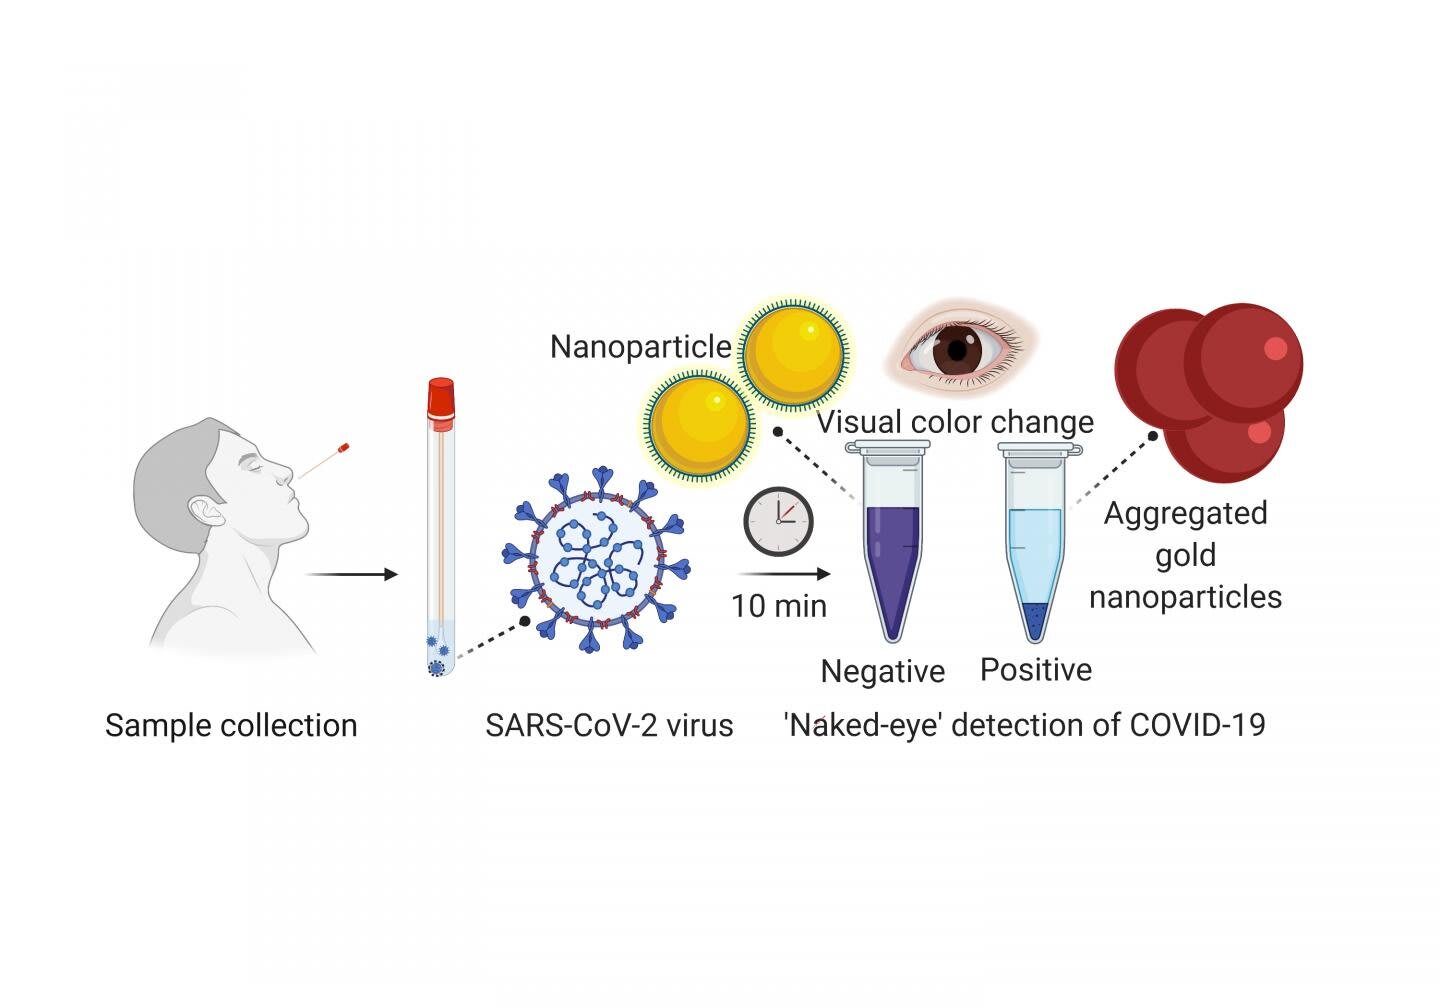 Researchers develop experimental rapid COVID-19 test using nanoparticle technique